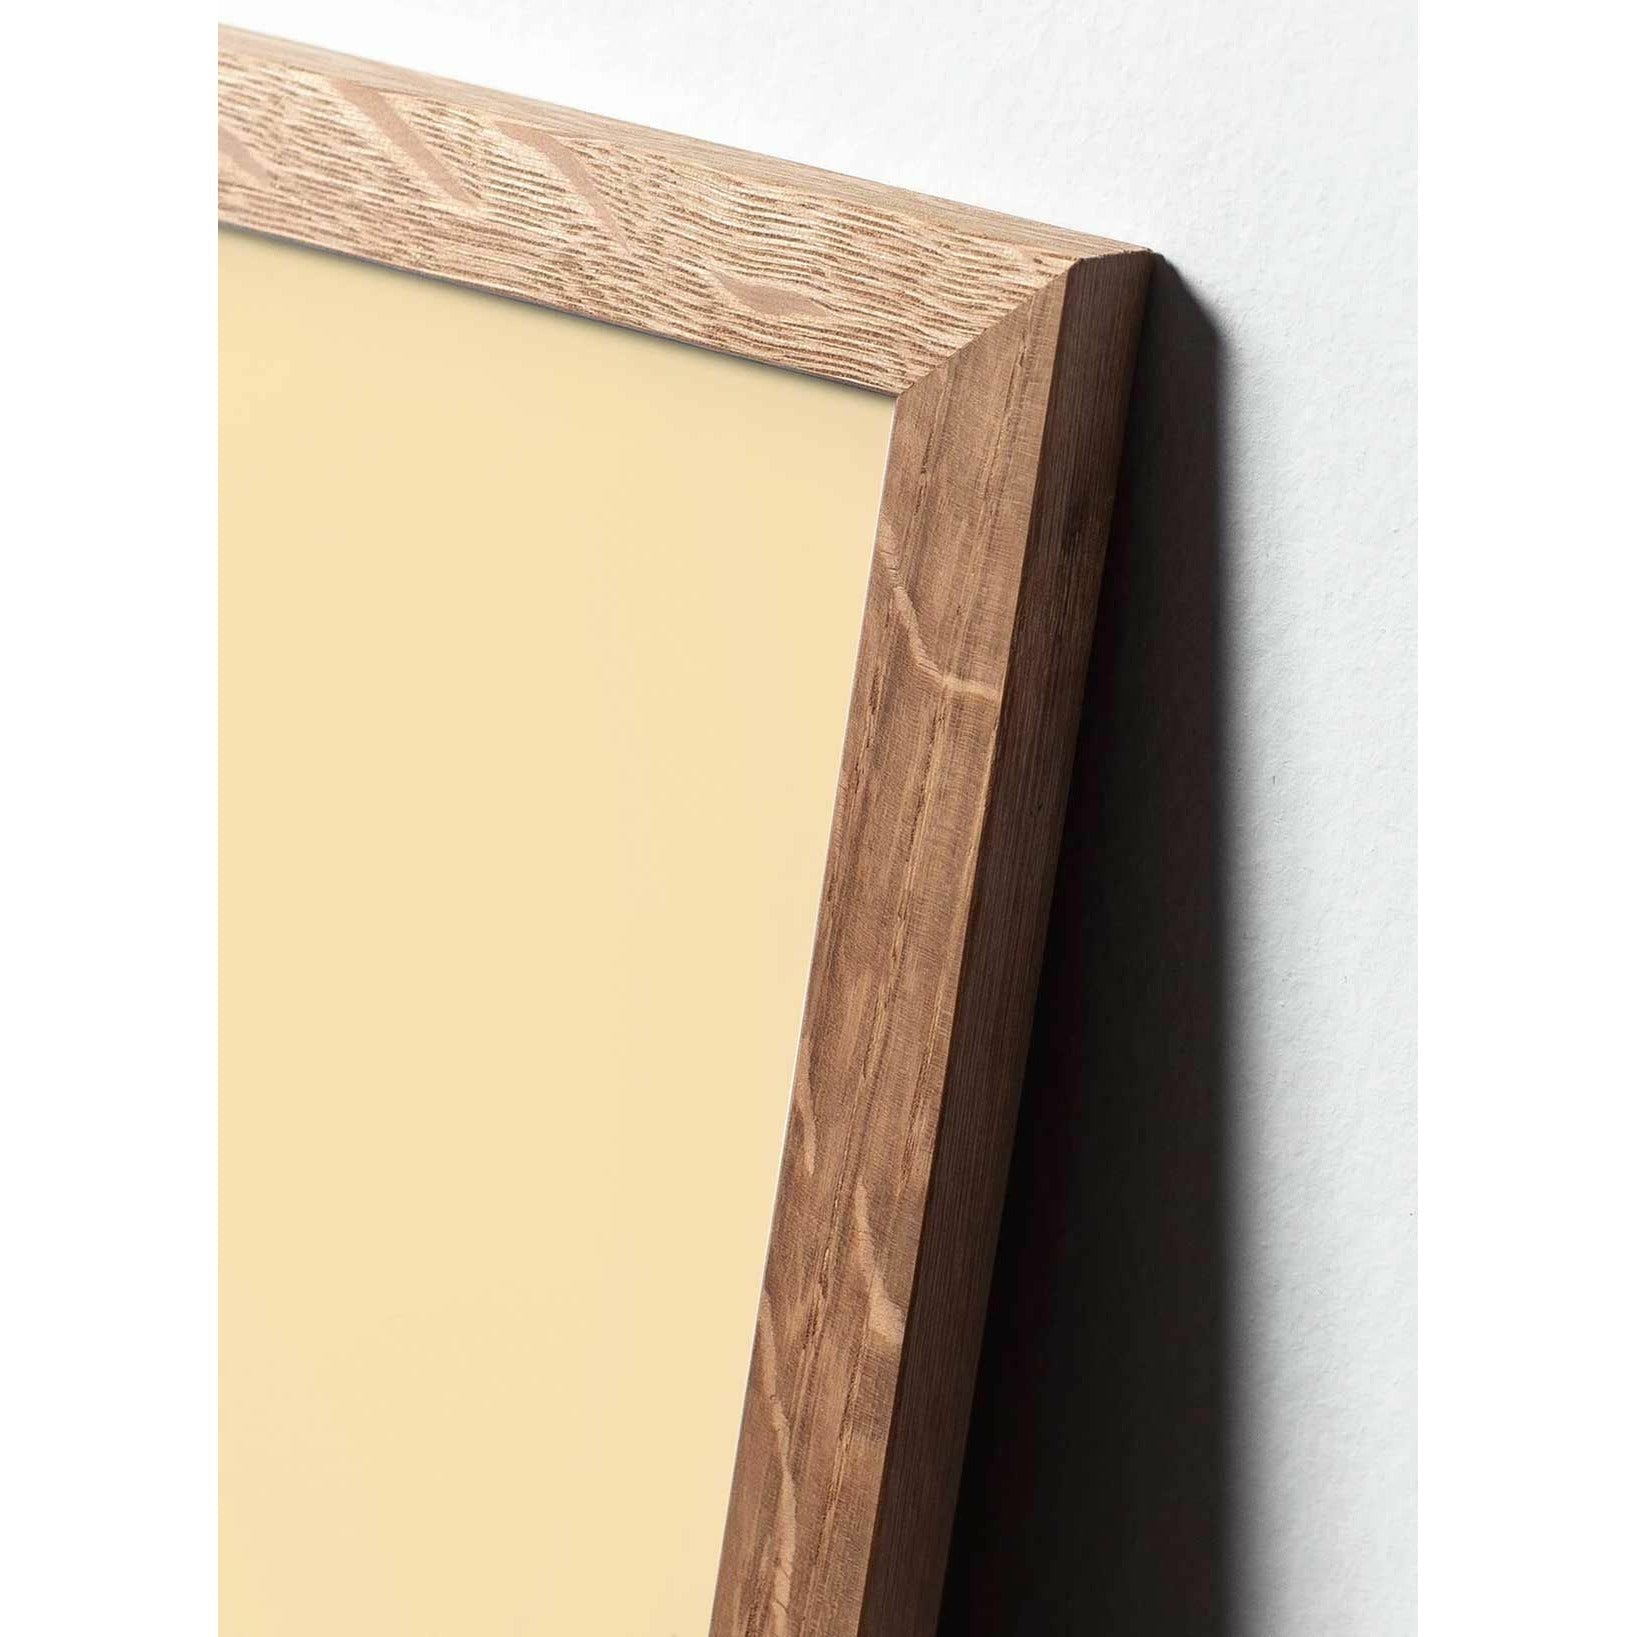 Póster clásico de Snowdrop de creación, marco hecho de madera clara de 30x40 cm, fondo morado